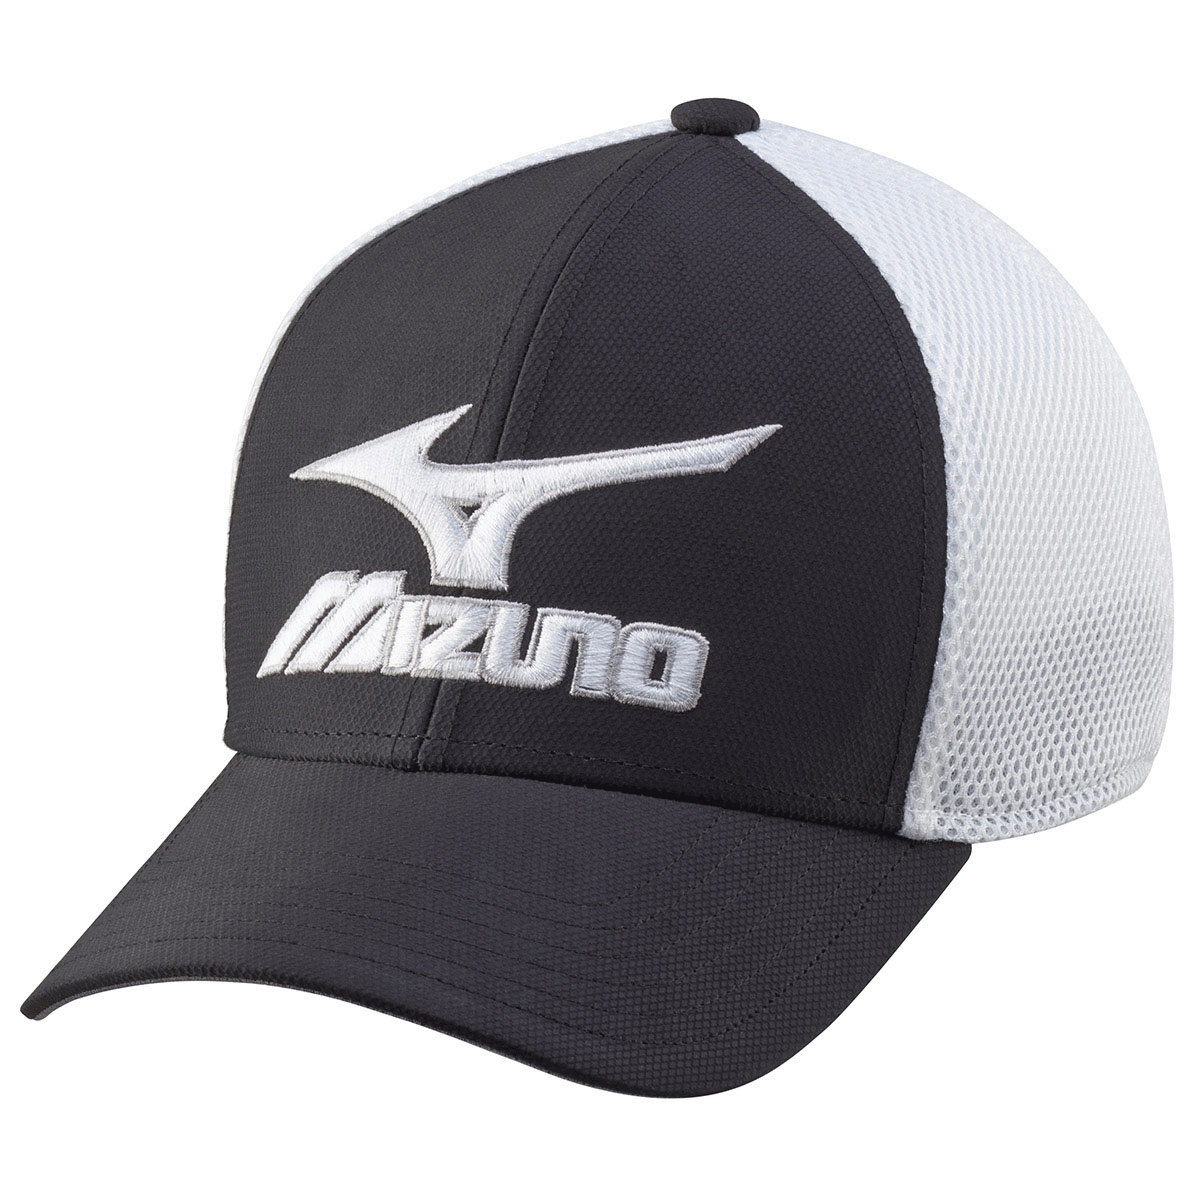 Mizuno Golf Logo - MIZUNO PHANTOM MENS PERFORMANCE FITTED GOLF CAP / WHITE